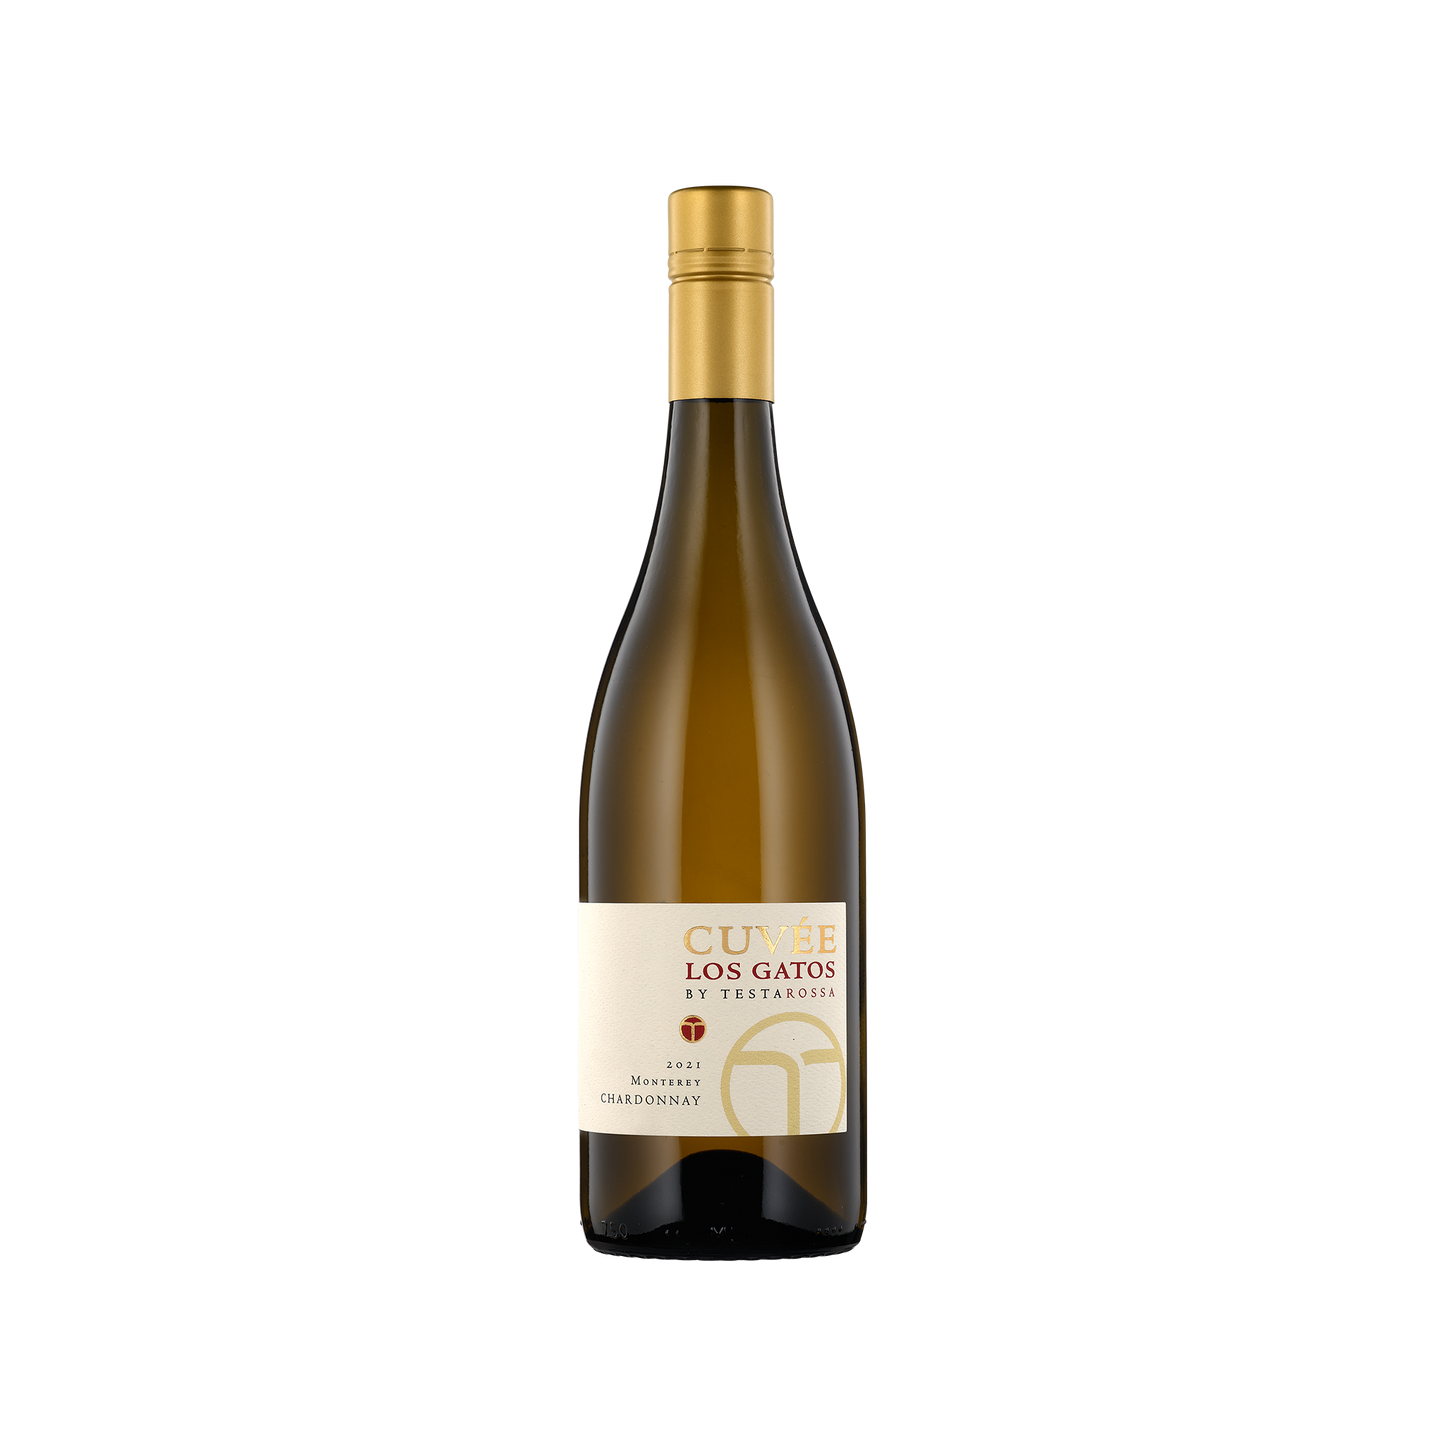 A bottle of Testarossa 2021 'Cuvee Los Gatos' Chardonnay